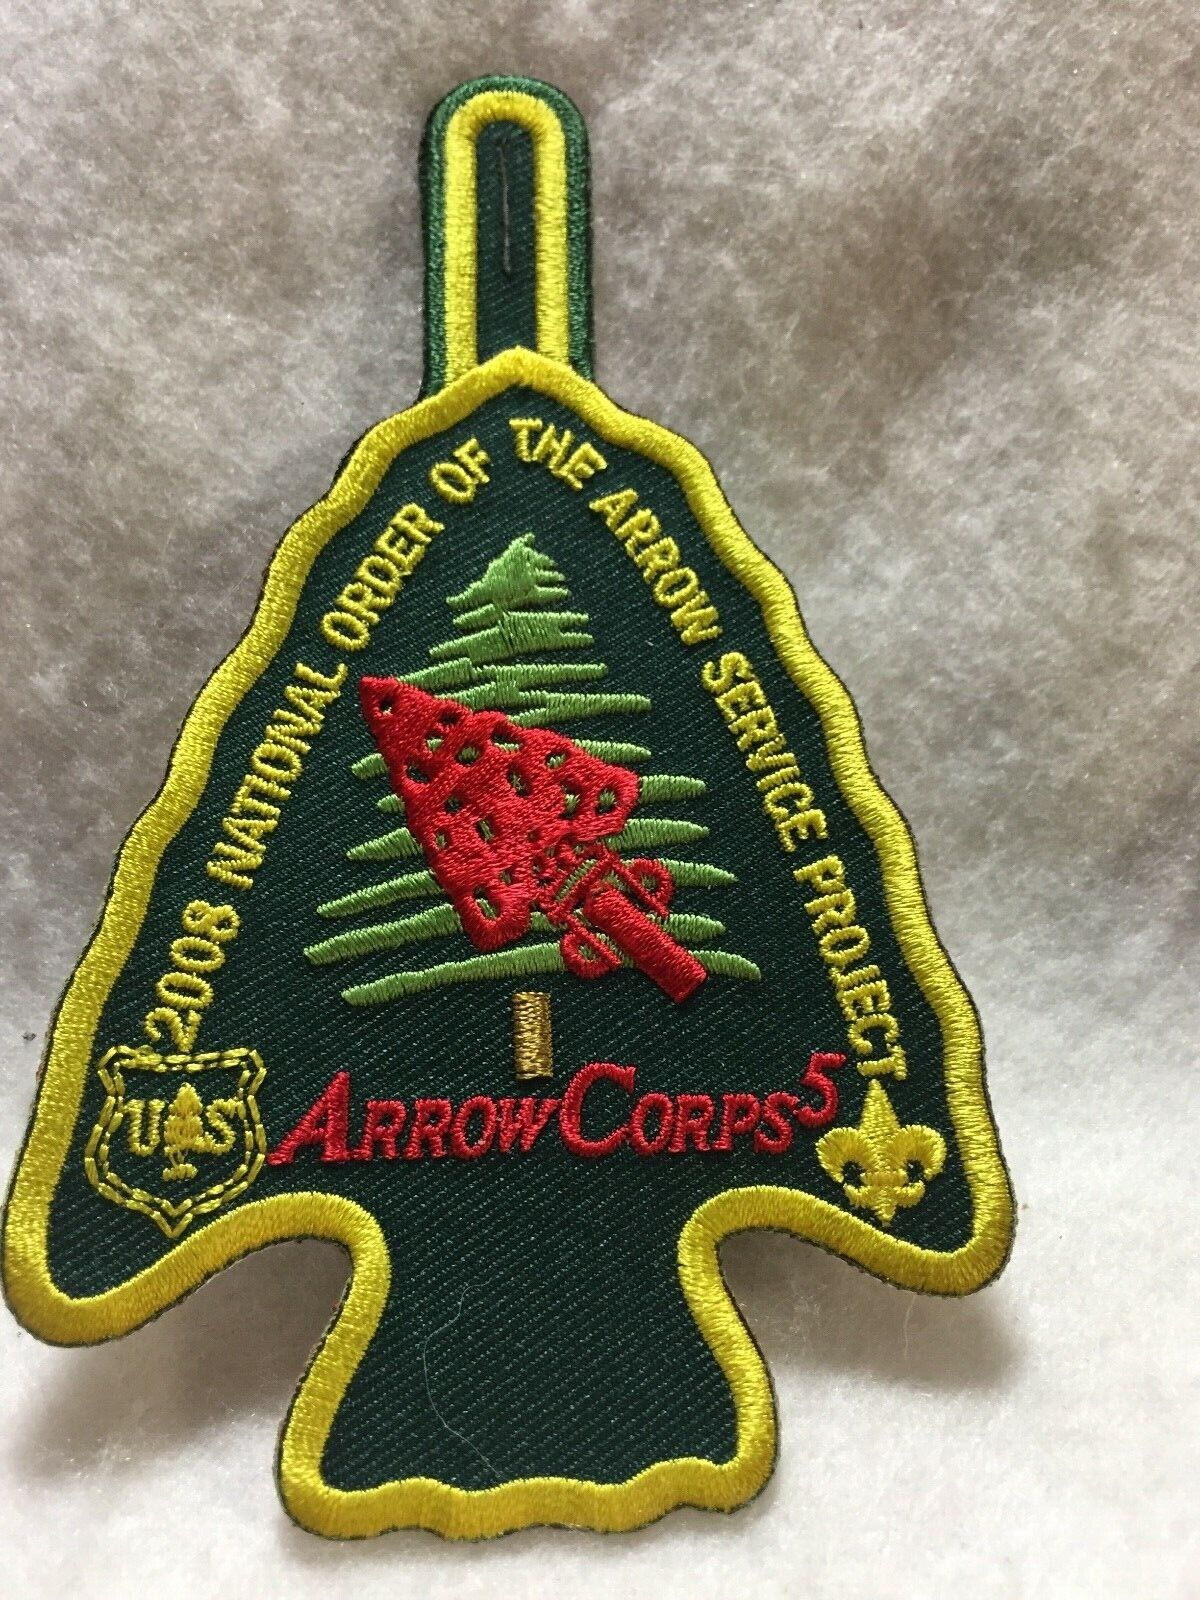 (b42) Boy Scouts-  2008 ArrowCorps5 arrowhead patch